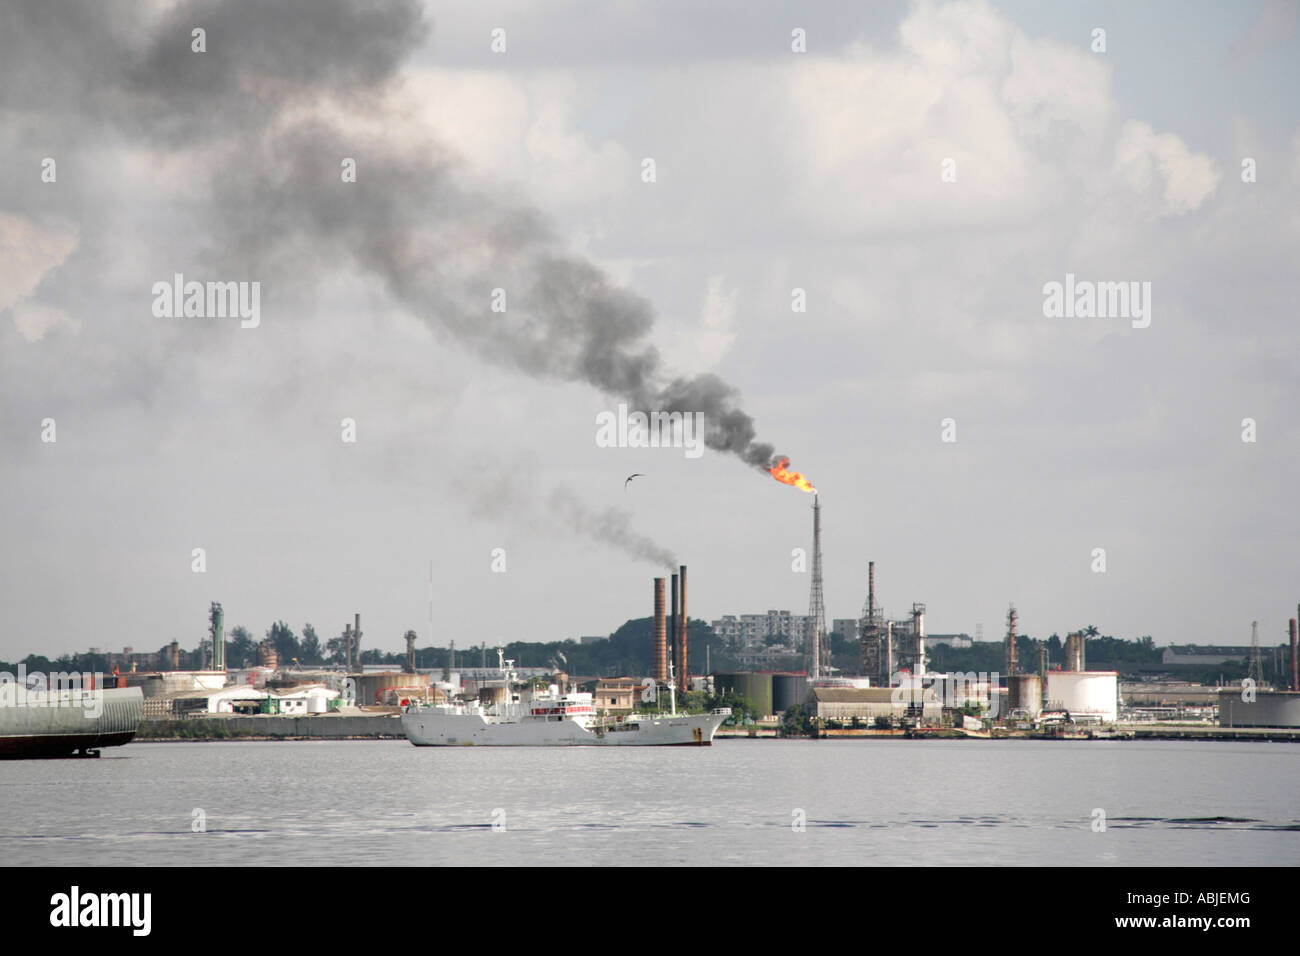 stock-photo-of-the-oil-refinery-and-harbour-havana-cuba-ABJEMG.jpg